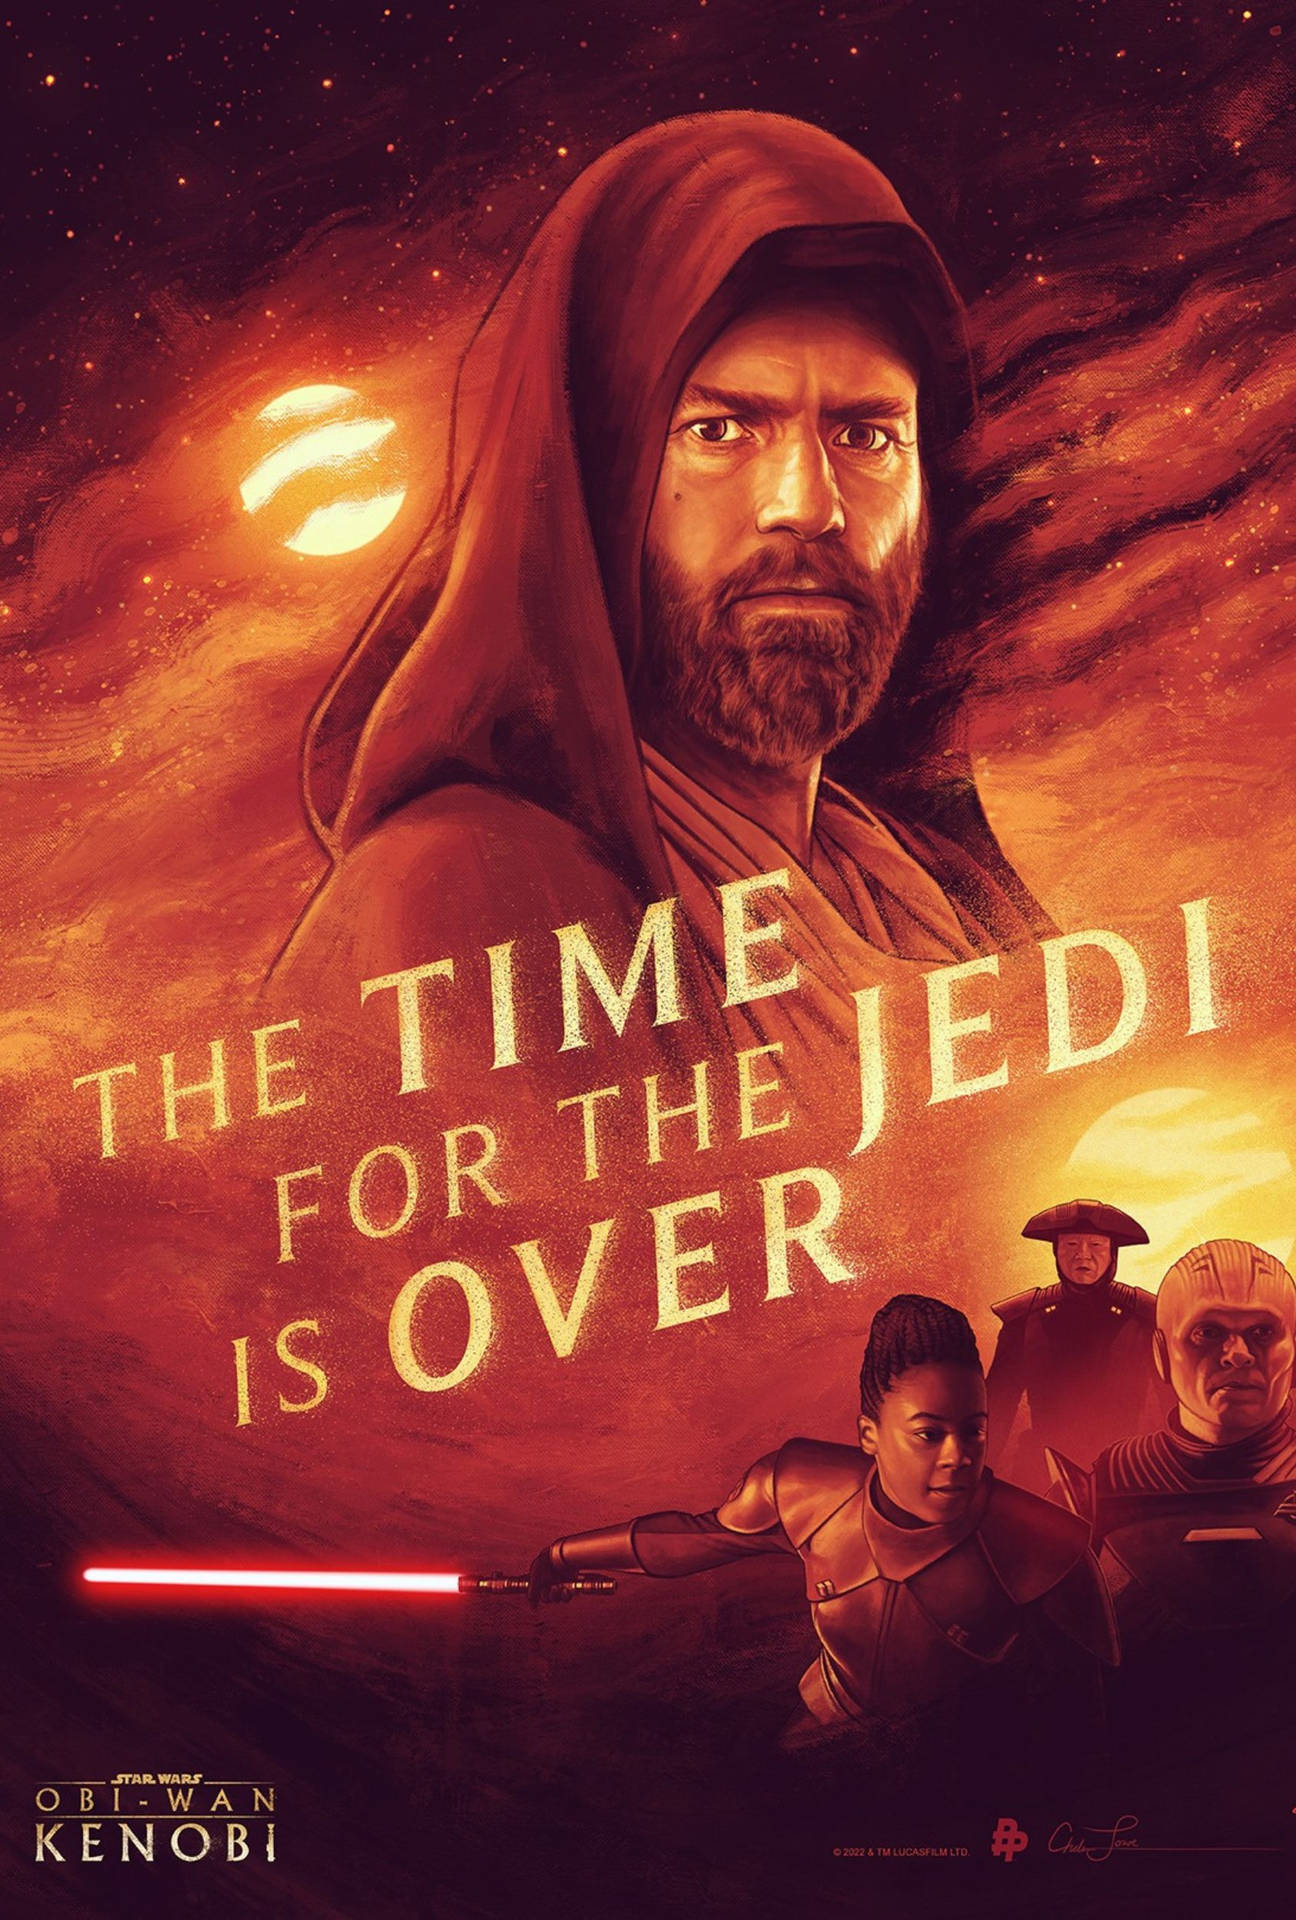 Obi Wan Kenobi Jedi Is Over